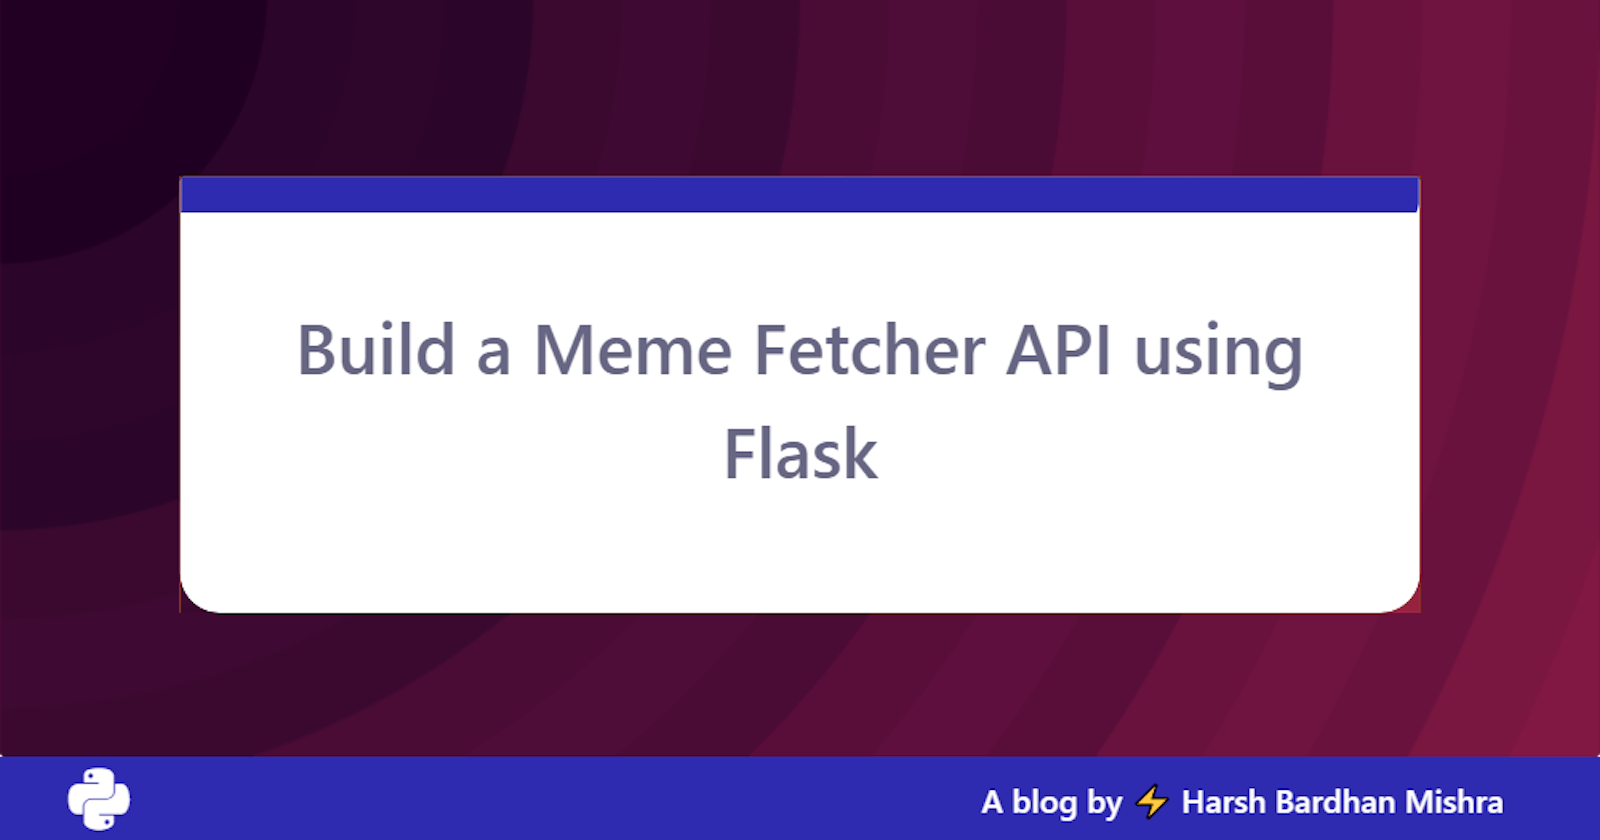 Build a Meme Fetcher API using Flask